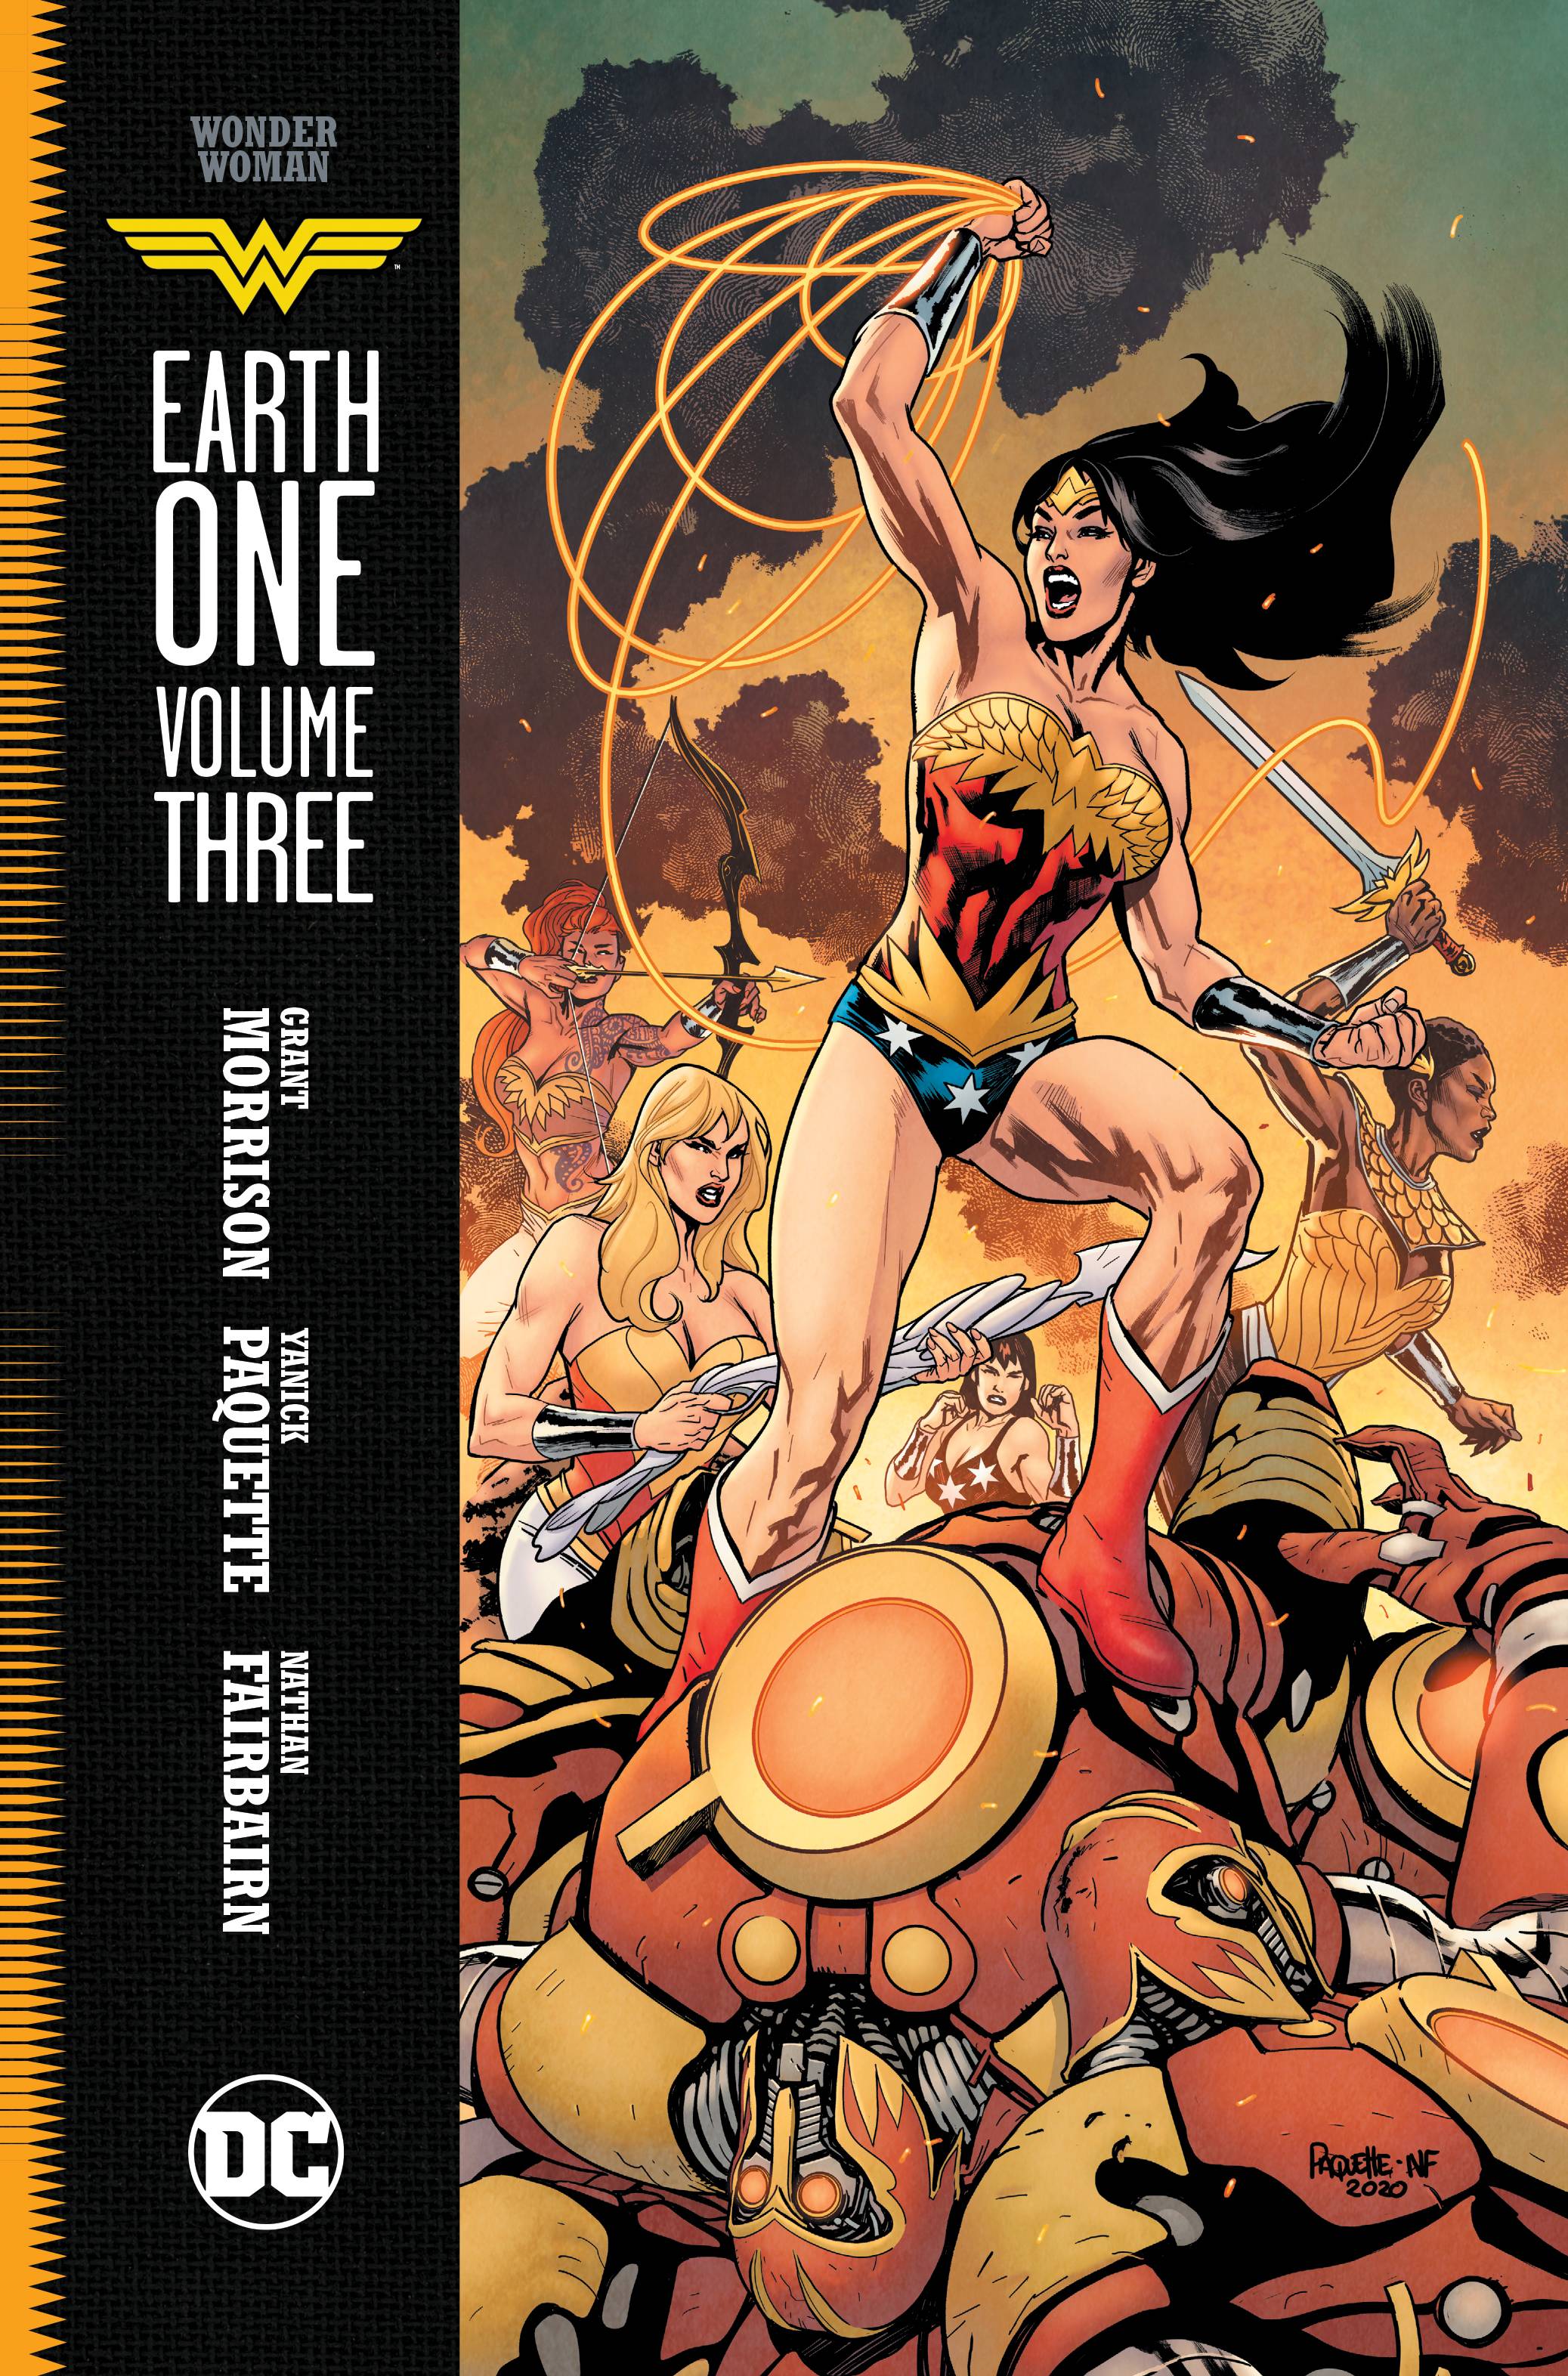 Wonder Woman: Earth One vol 3 h/c